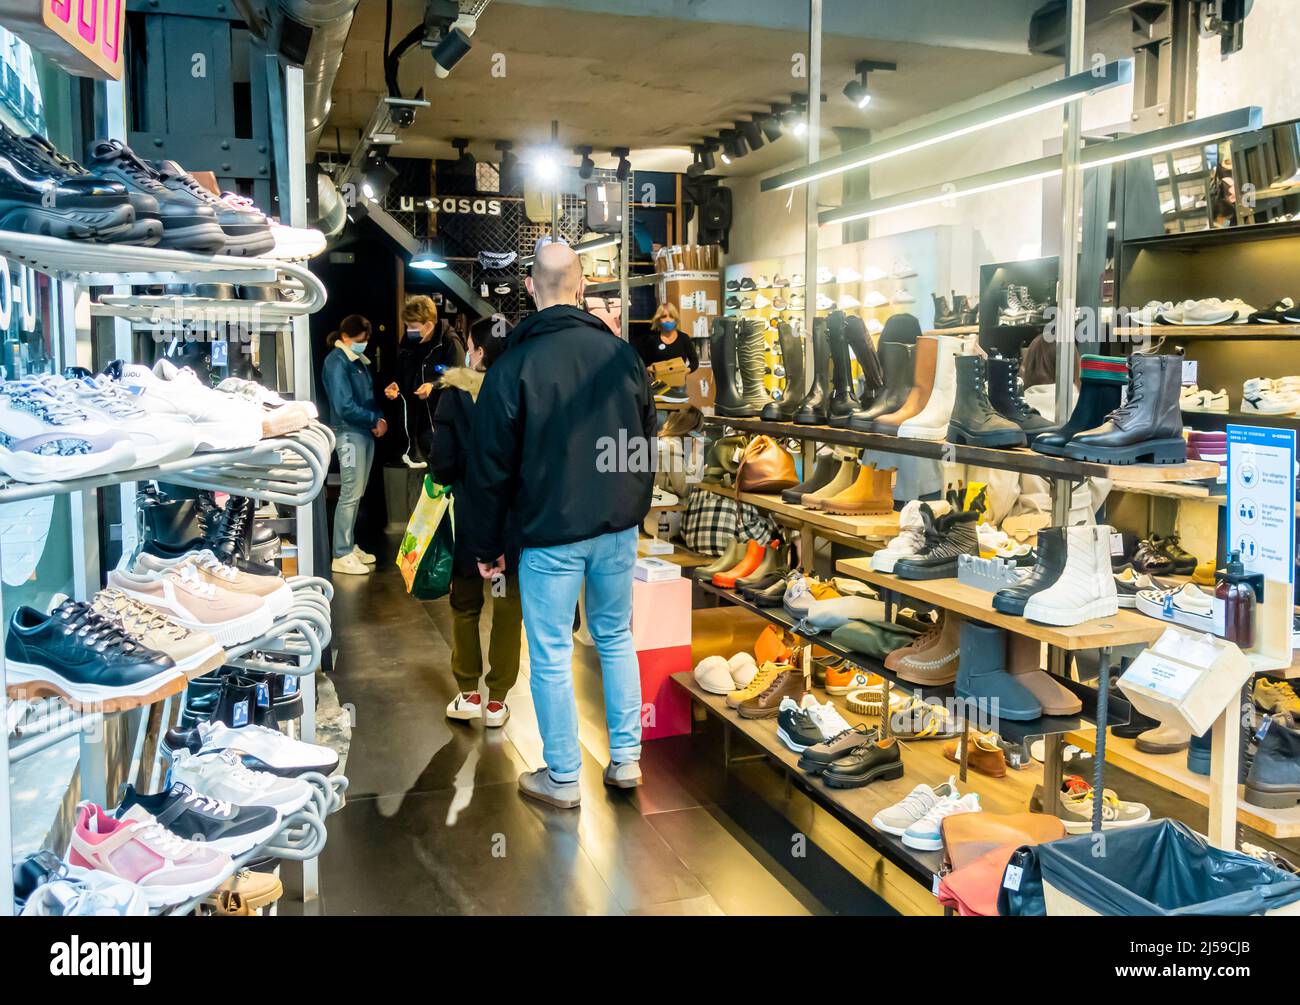 U-casas, Shoe store in Malasana, Madrid, Spain Stock Photo - Alamy